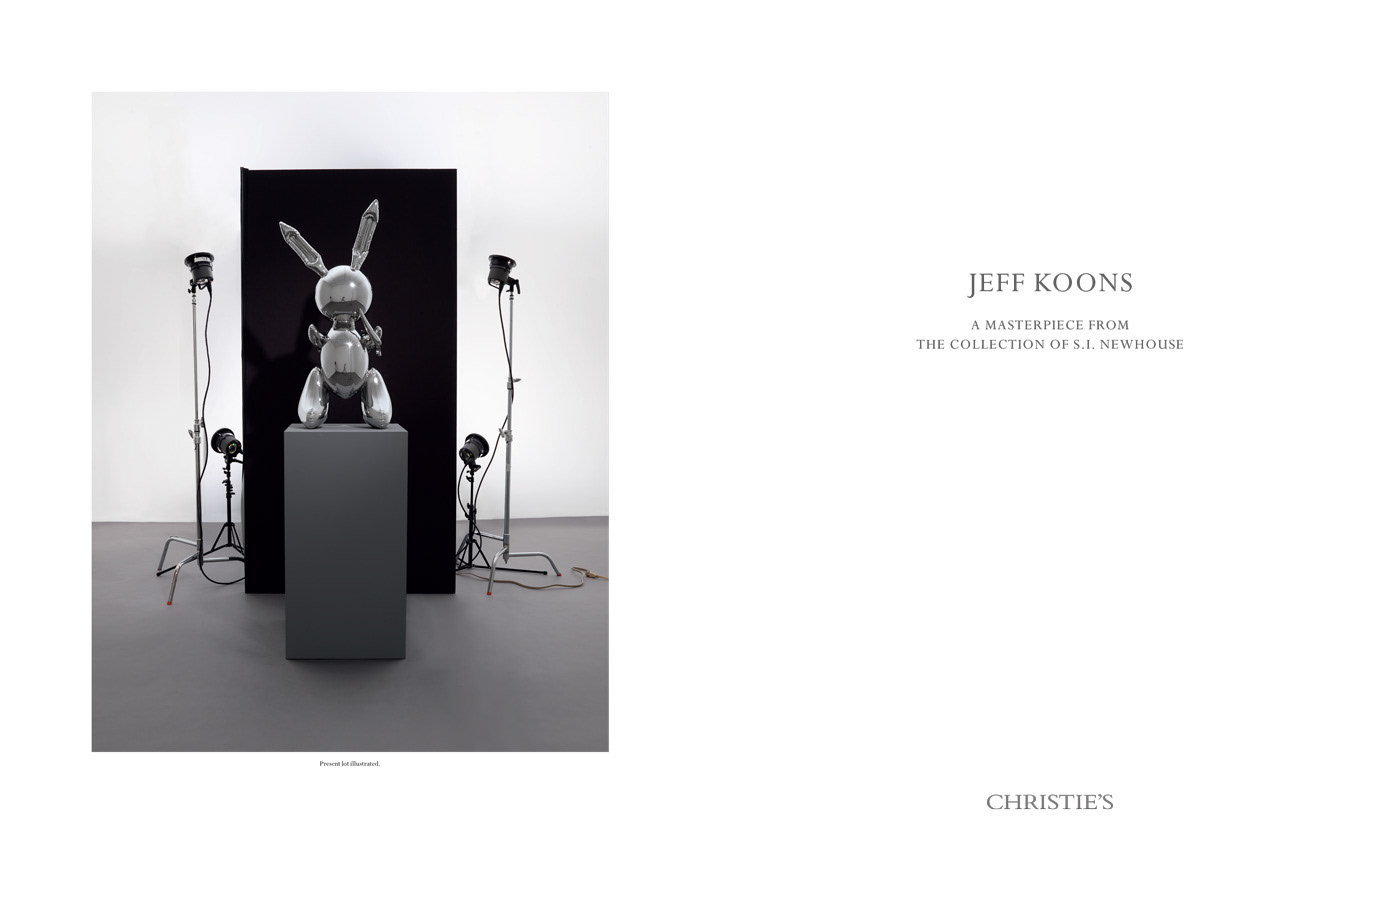 How Jeff Koons's “Rabbit” Became Big Game